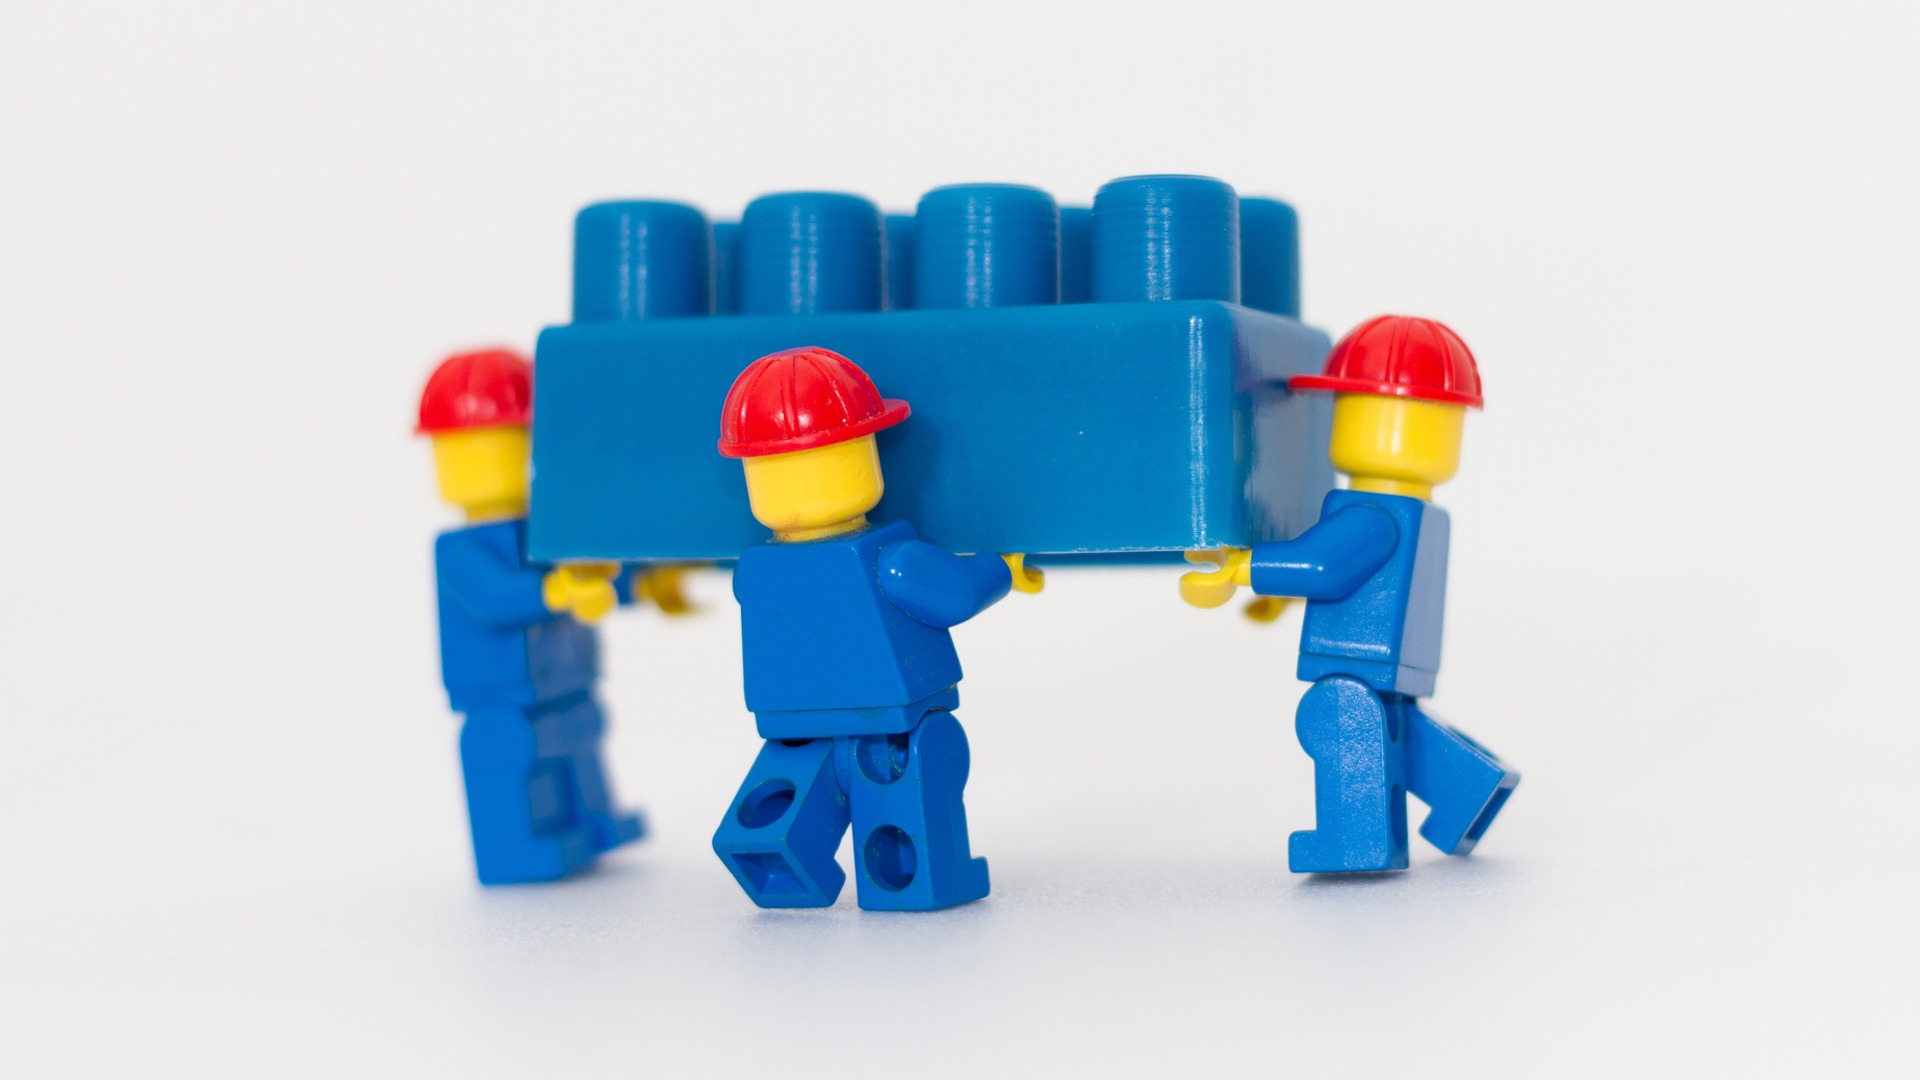 Lego builders